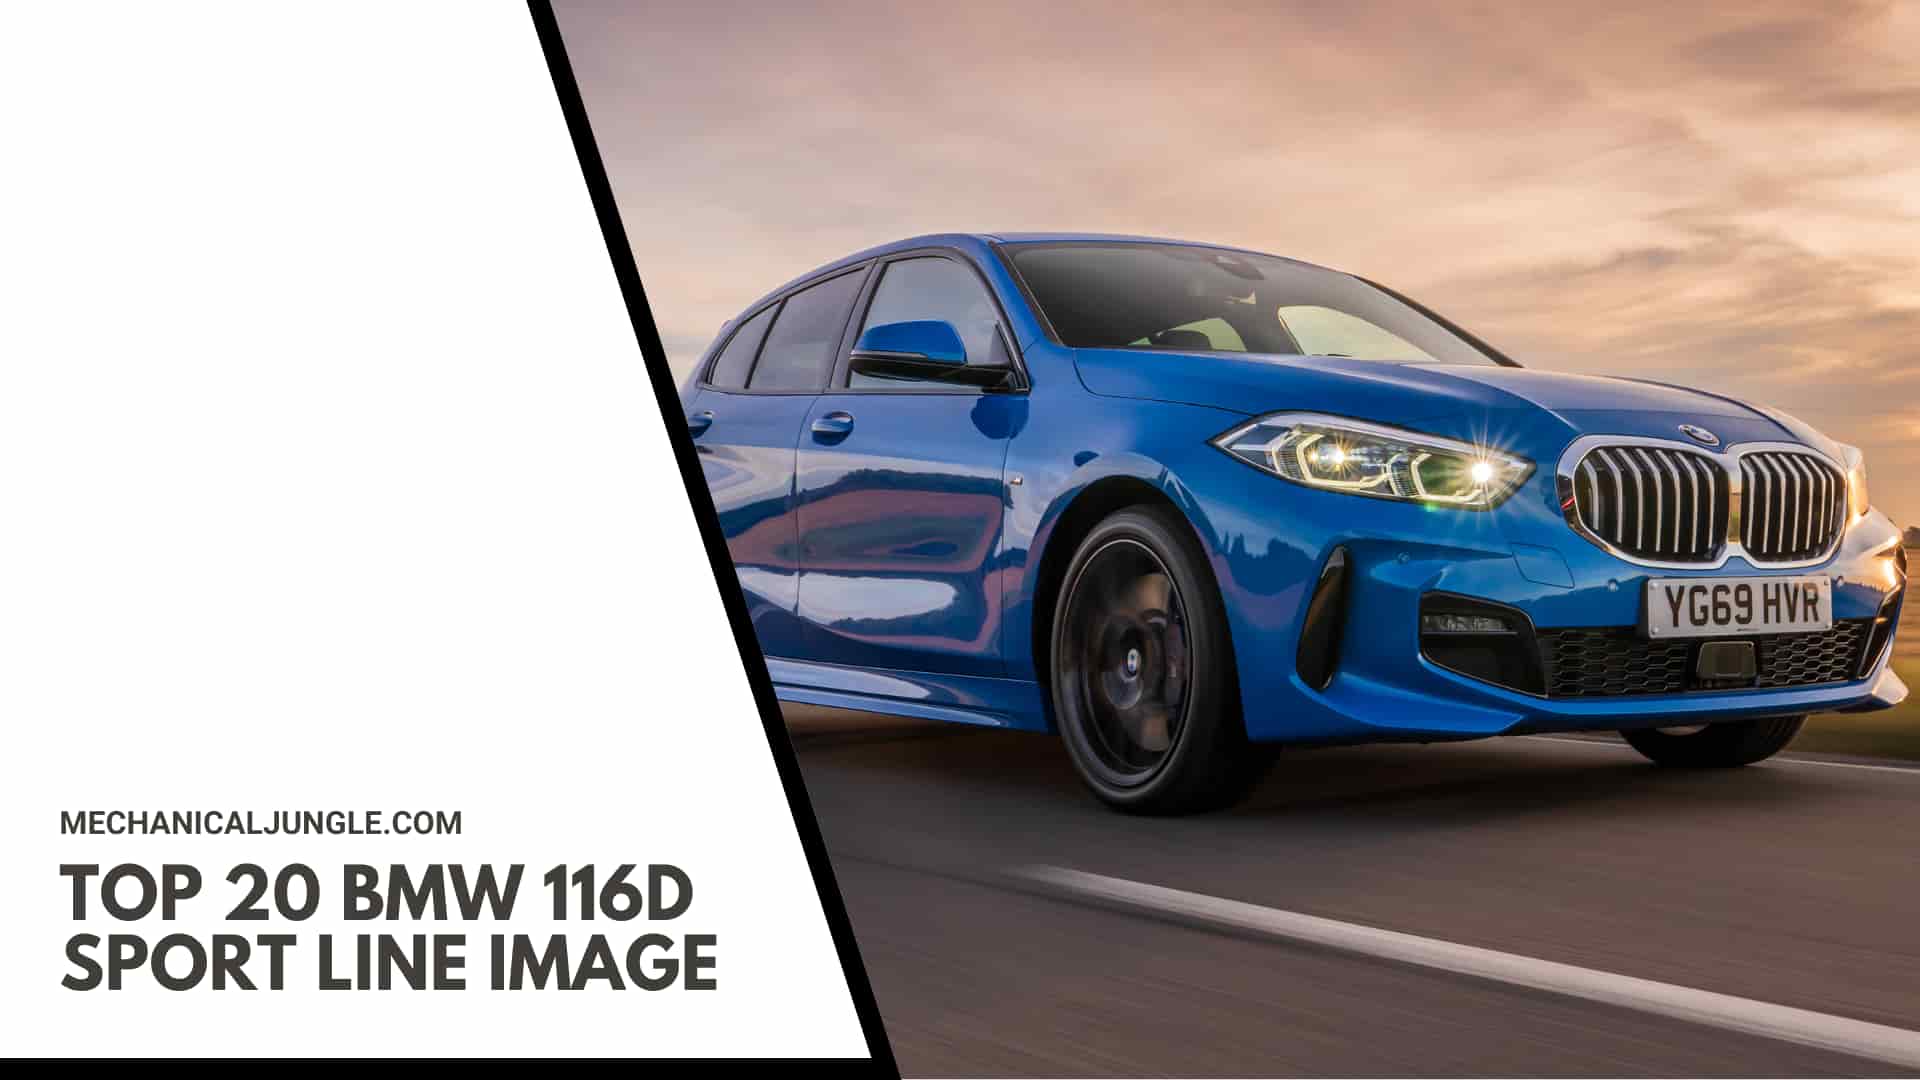 Top 20 BMW 116d Sport Line Image